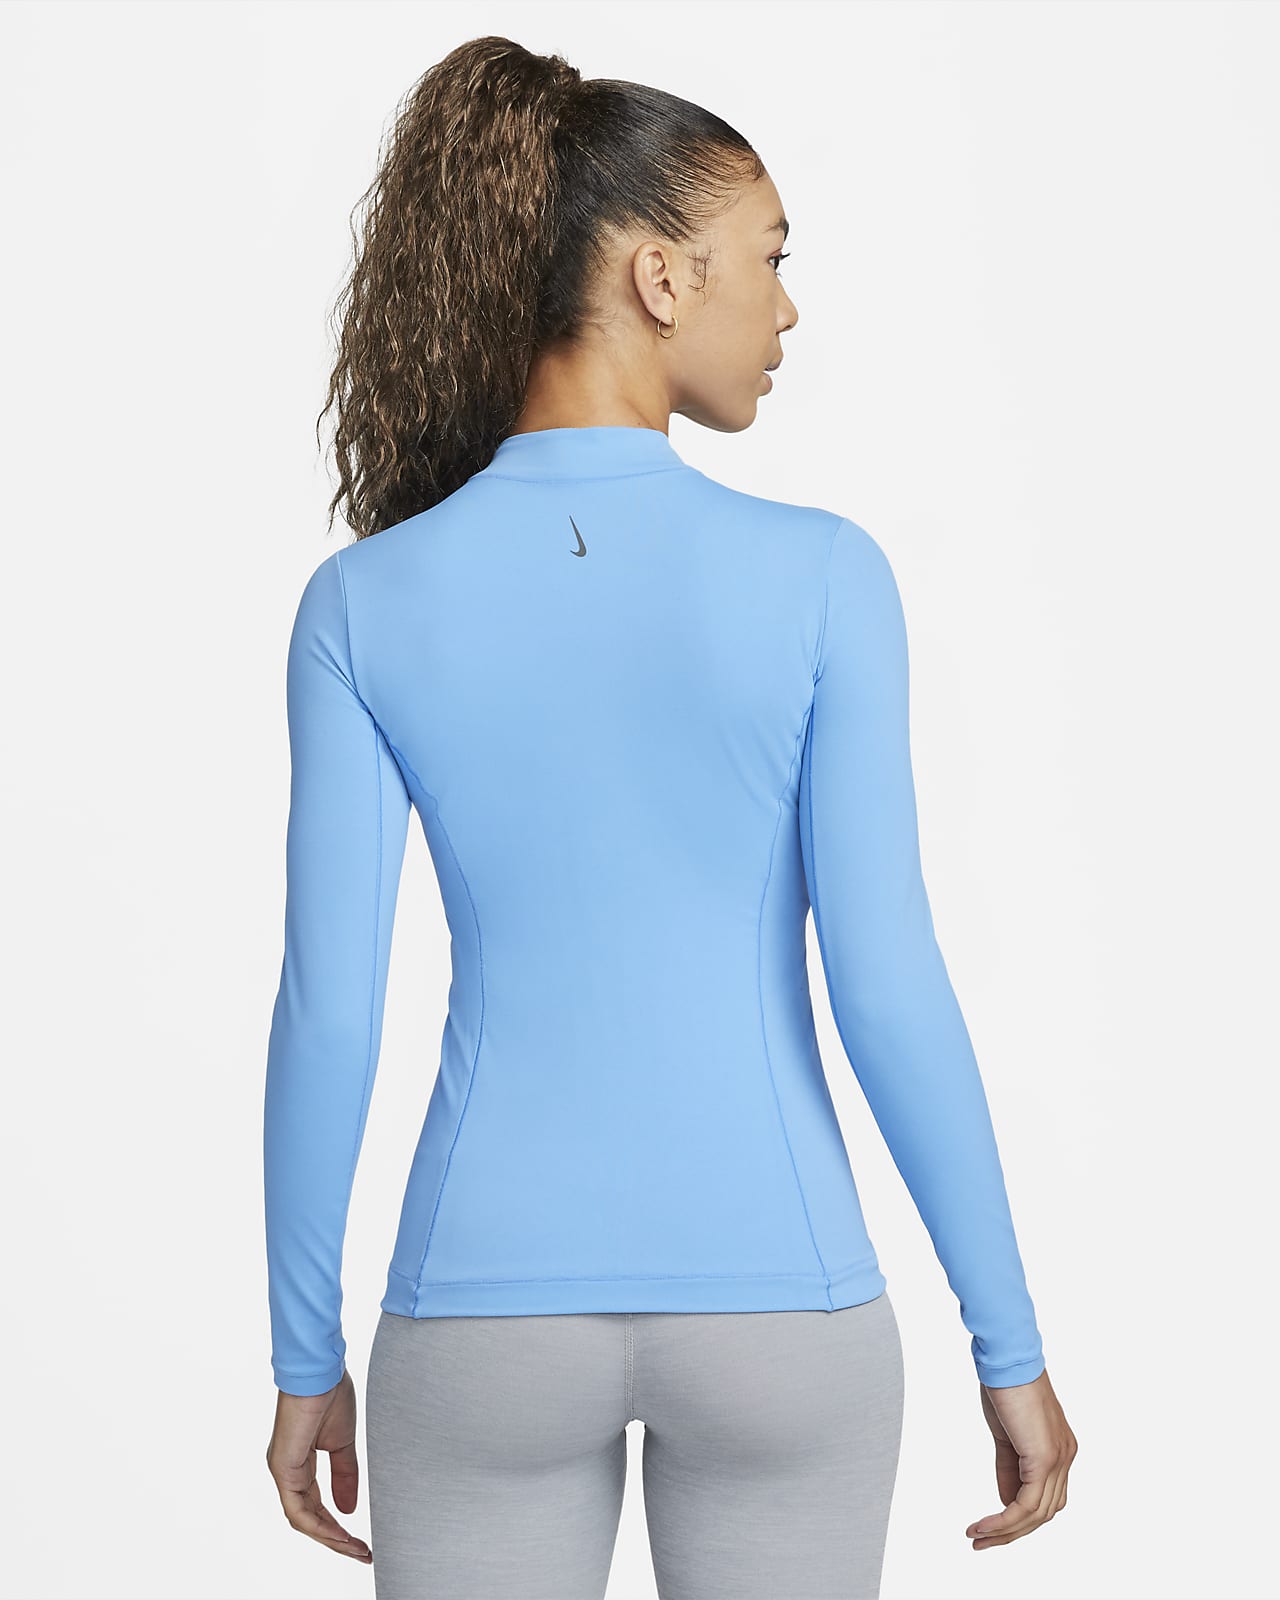 Nike Yoga Womens Dri-FIT Luxe Pants Blue L